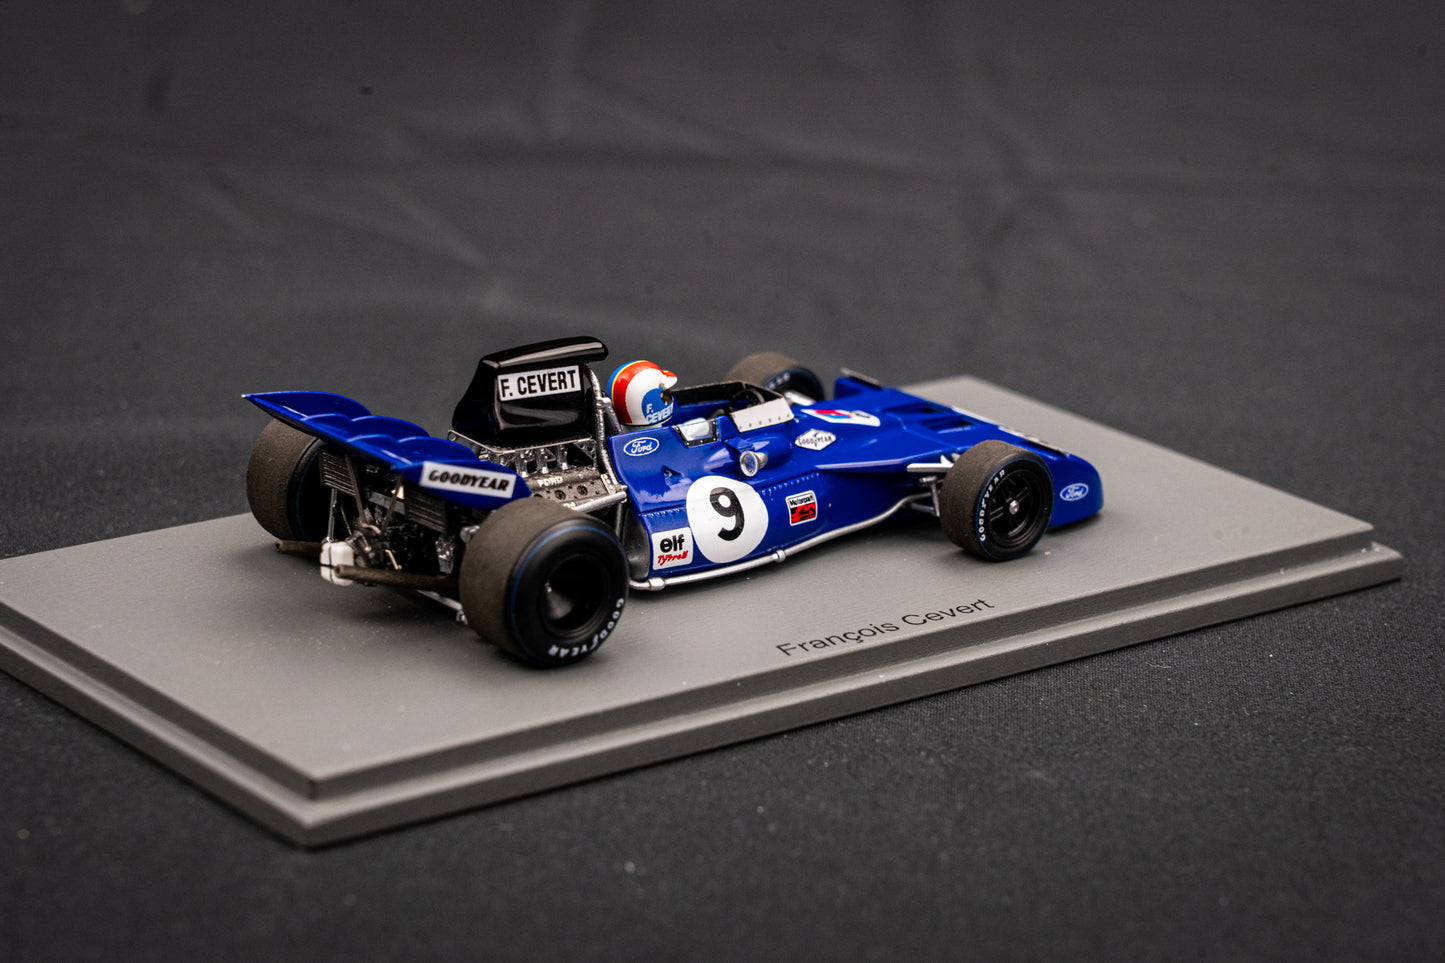 Tyrell 002 #9 Francois Cevert - Winner GP USA 1971 - Spark 1:43